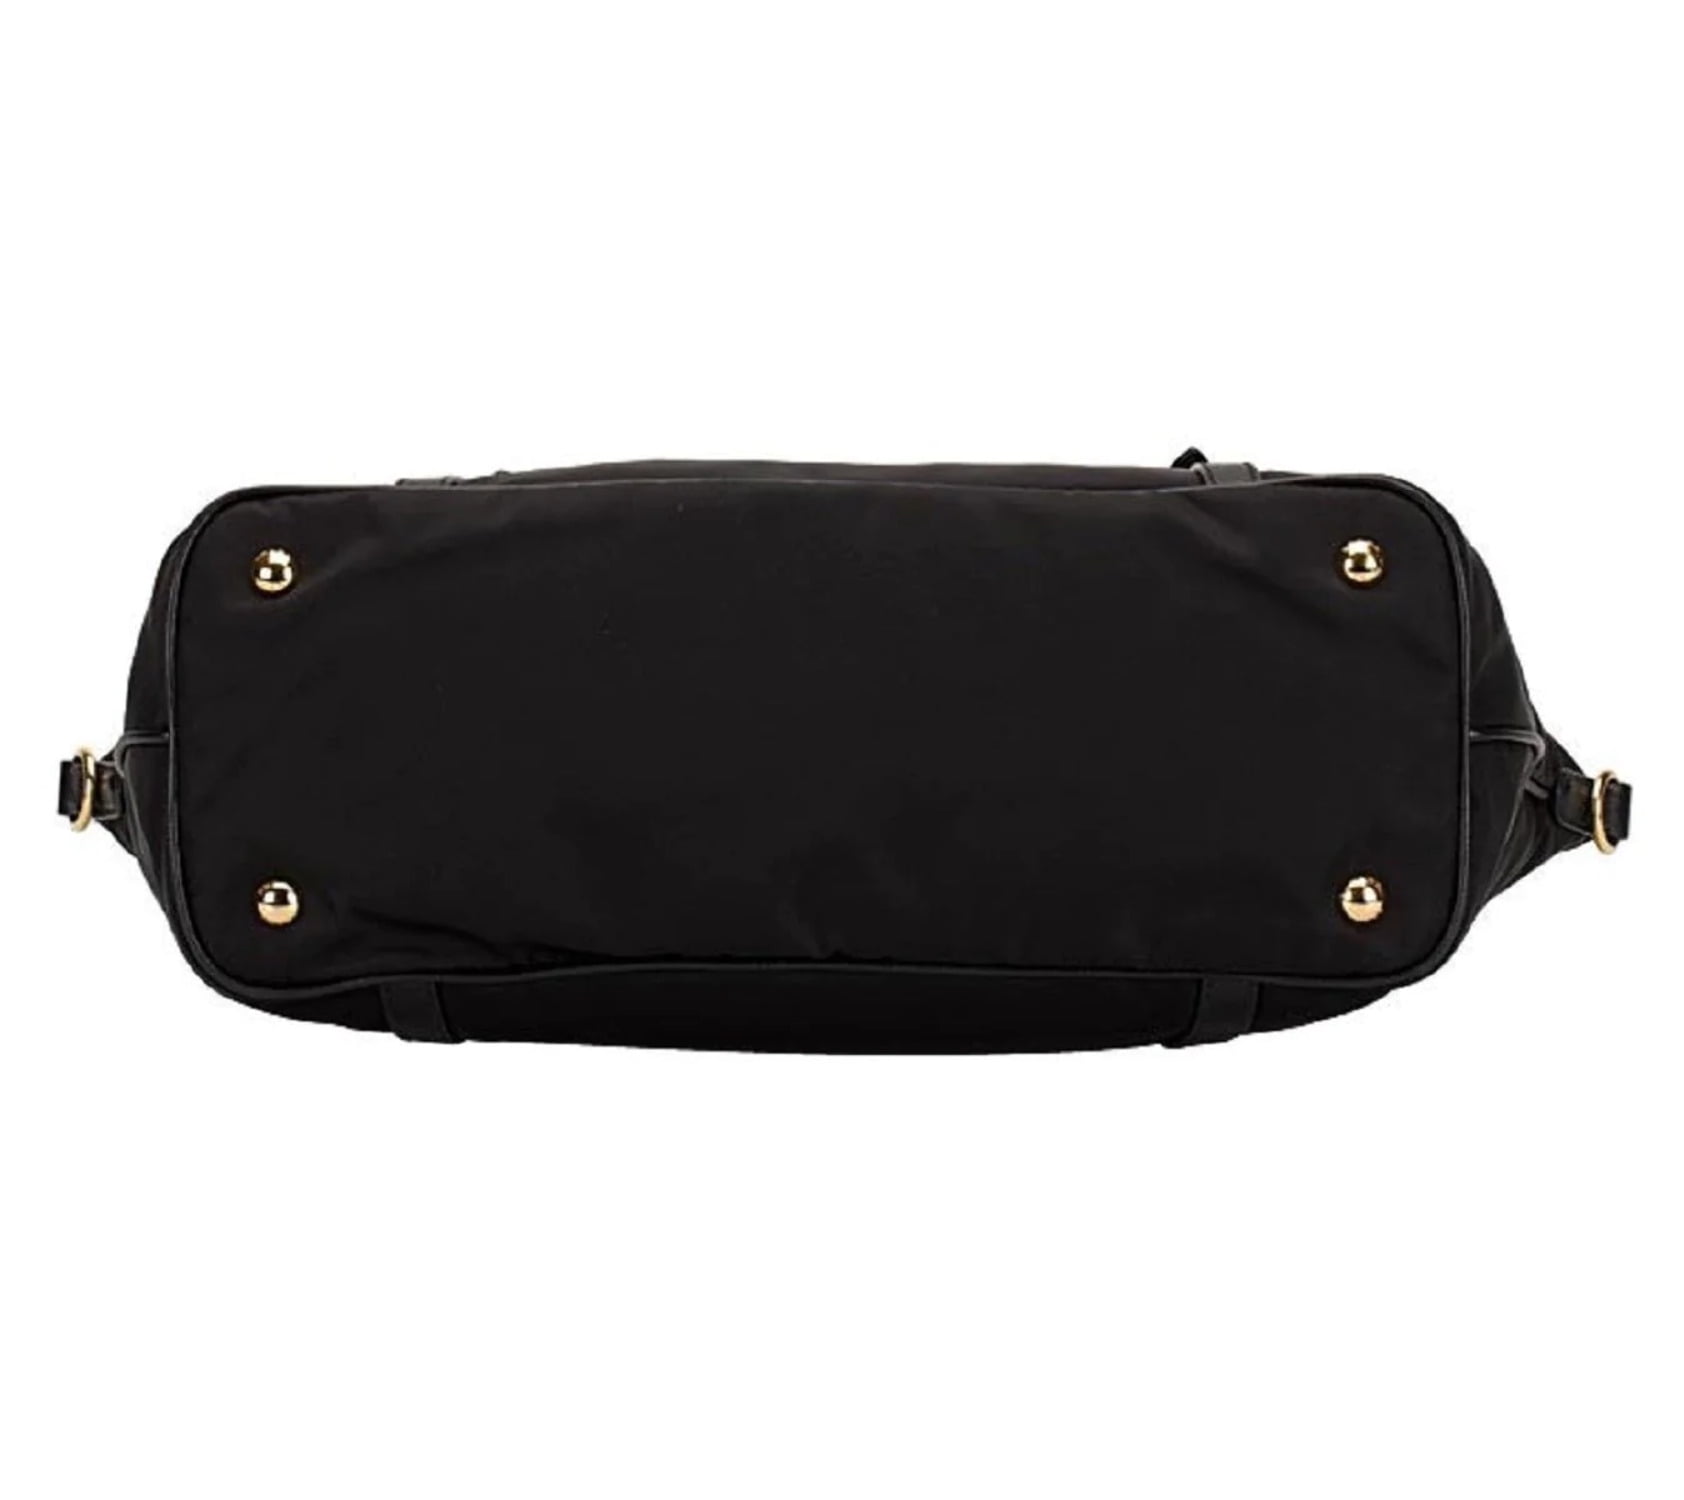 Authentic PRADA Tessuto Nylon Saffiano Leather Black Tote Bag 1BG253 F/S 